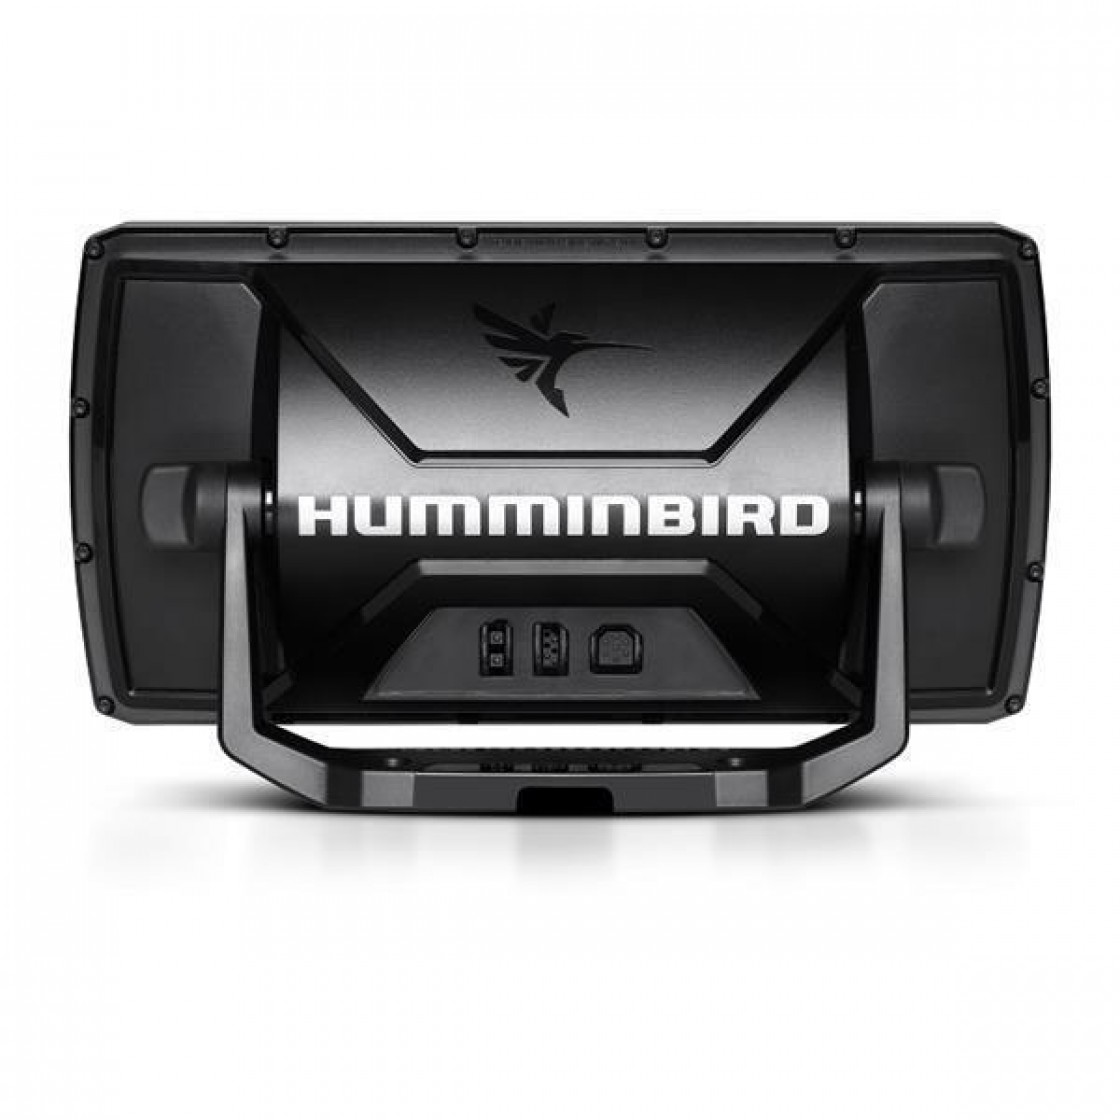 Humminbird Helix 7 CHIRP MEGA DI GPS G3